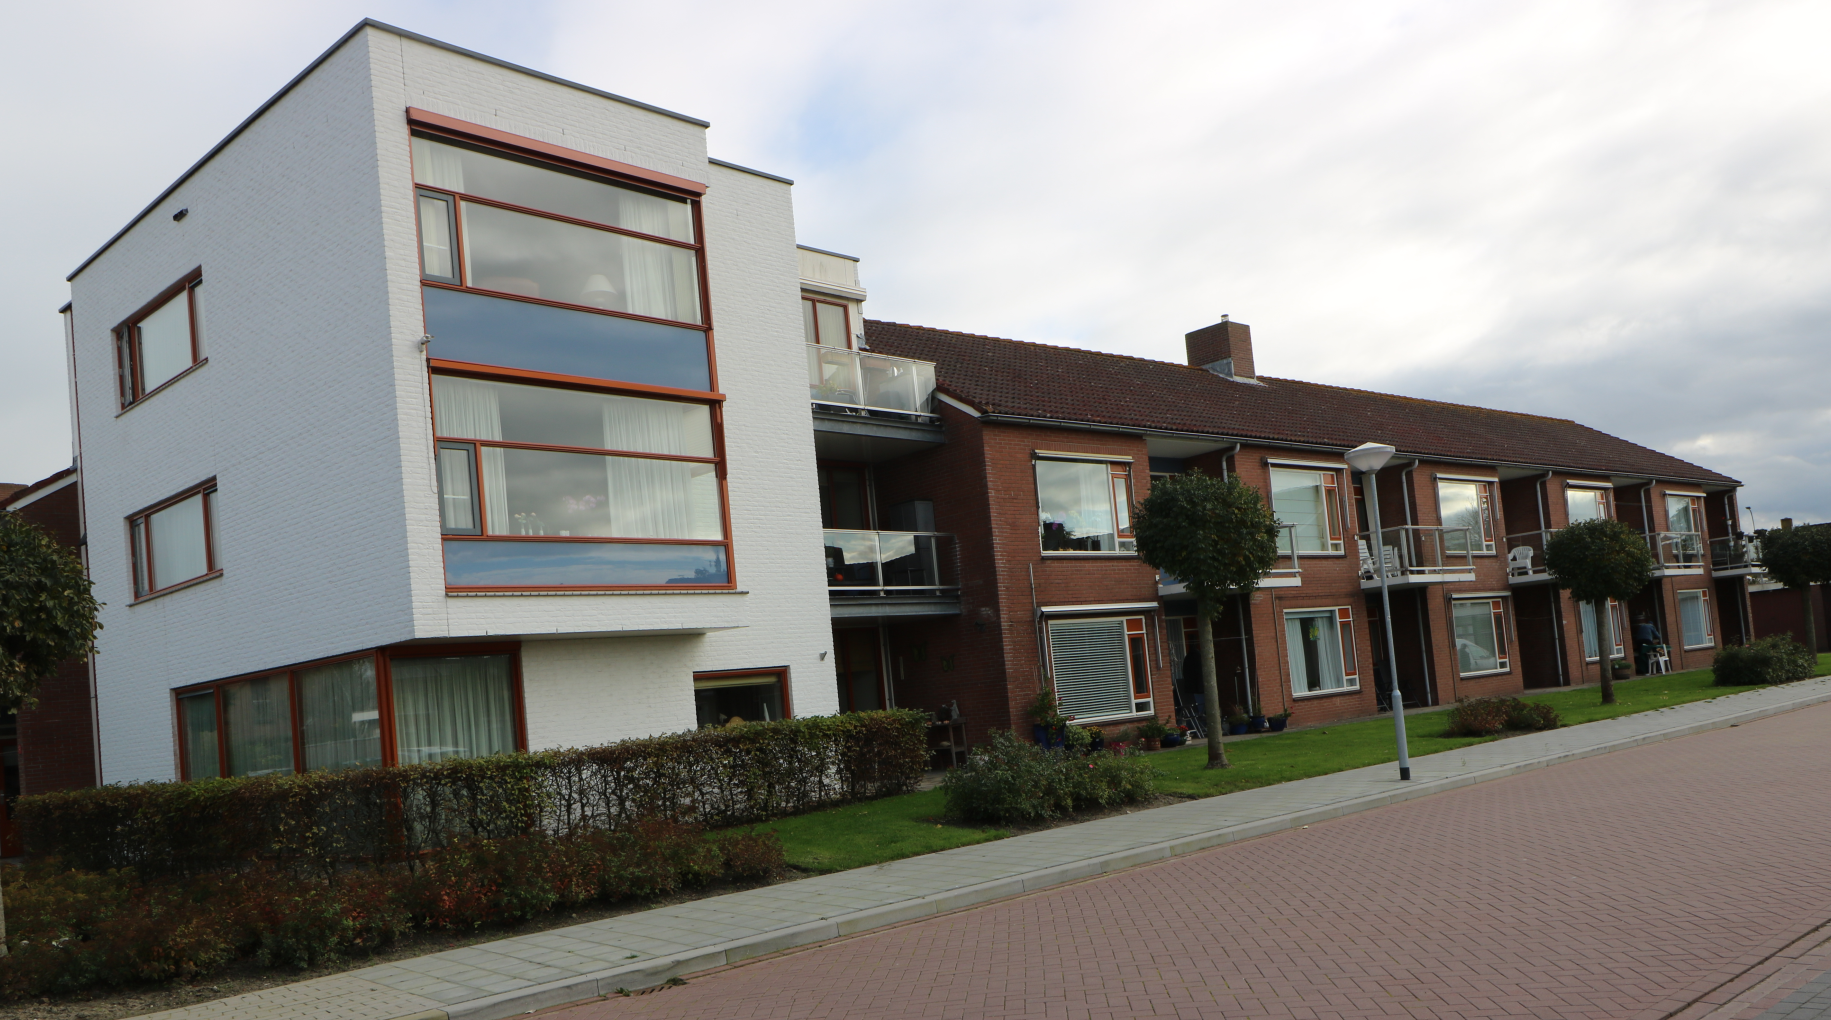 Gouwestraat 9, 4388 RA Oost-Souburg, Nederland